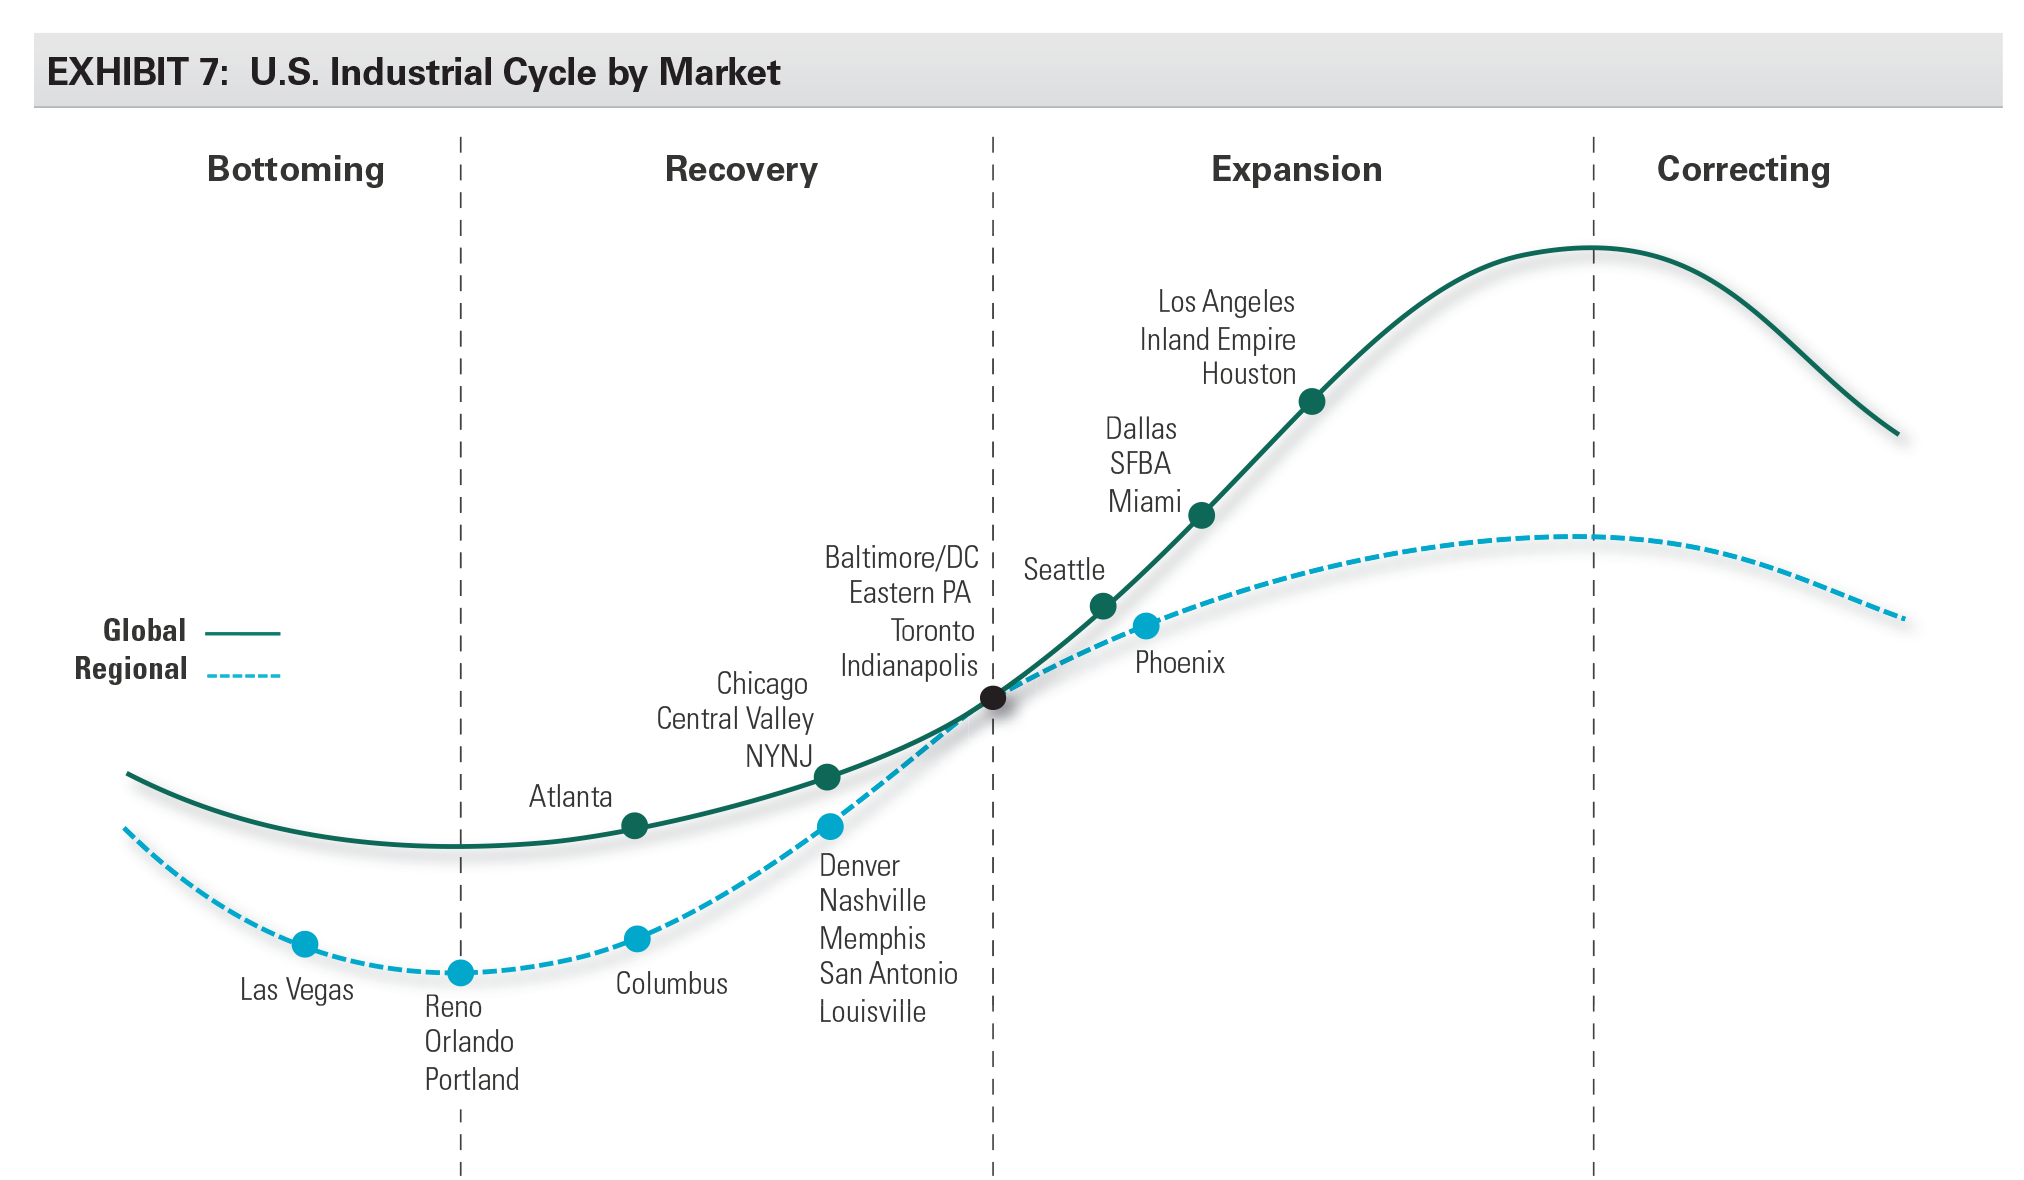 EXHIBIT 7: U.S. Industrial Cycle by Market